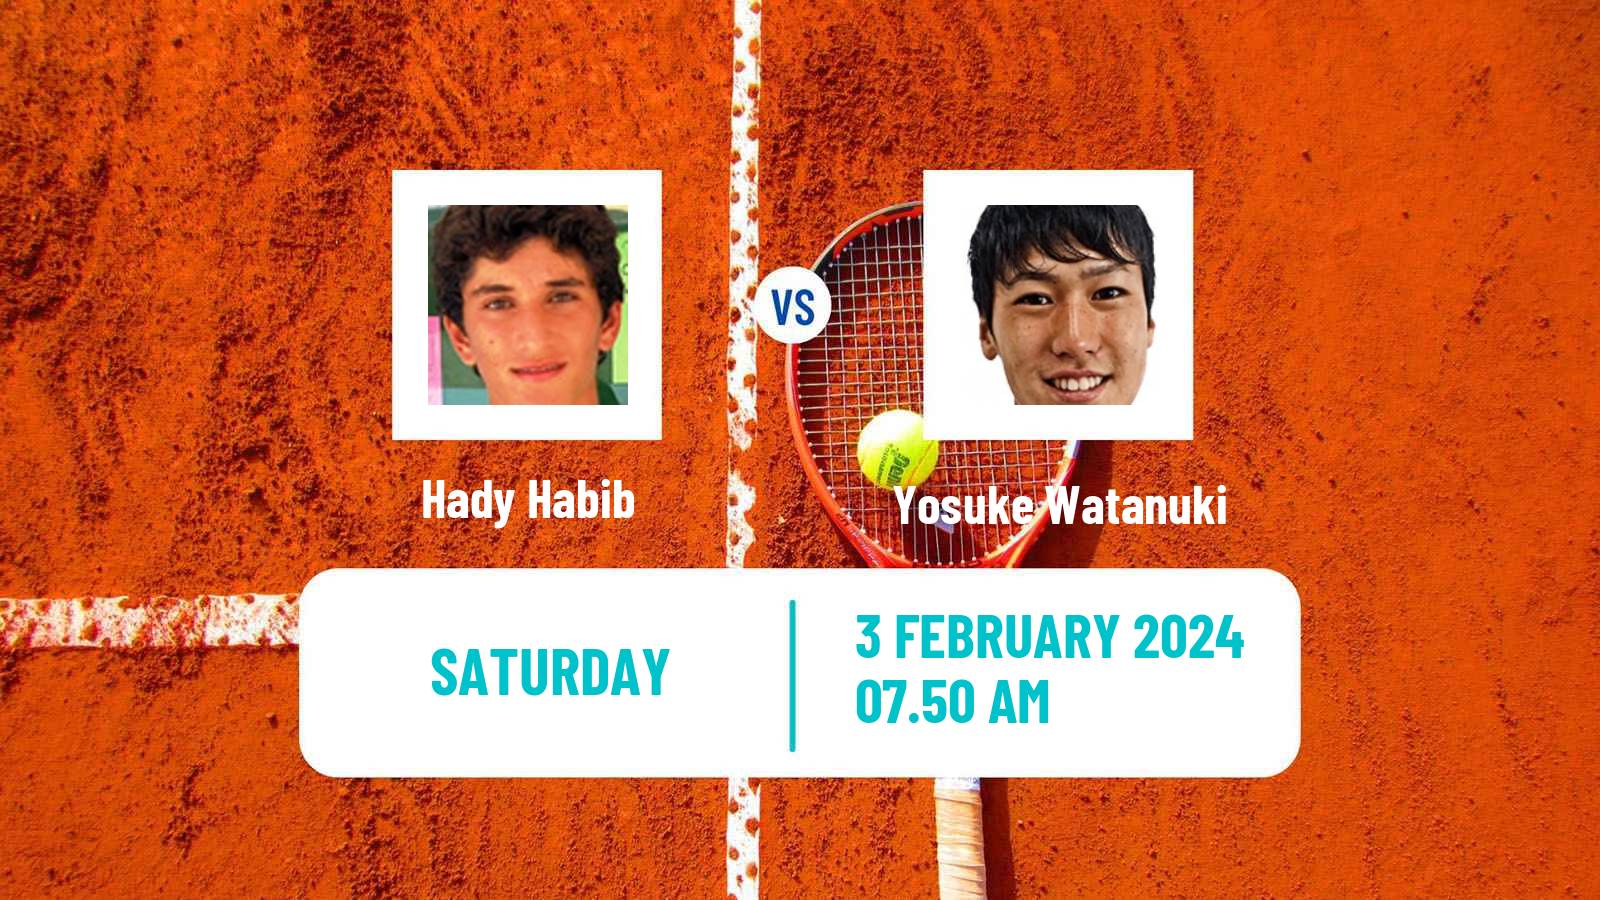 Tennis Davis Cup World Group I Hady Habib - Yosuke Watanuki